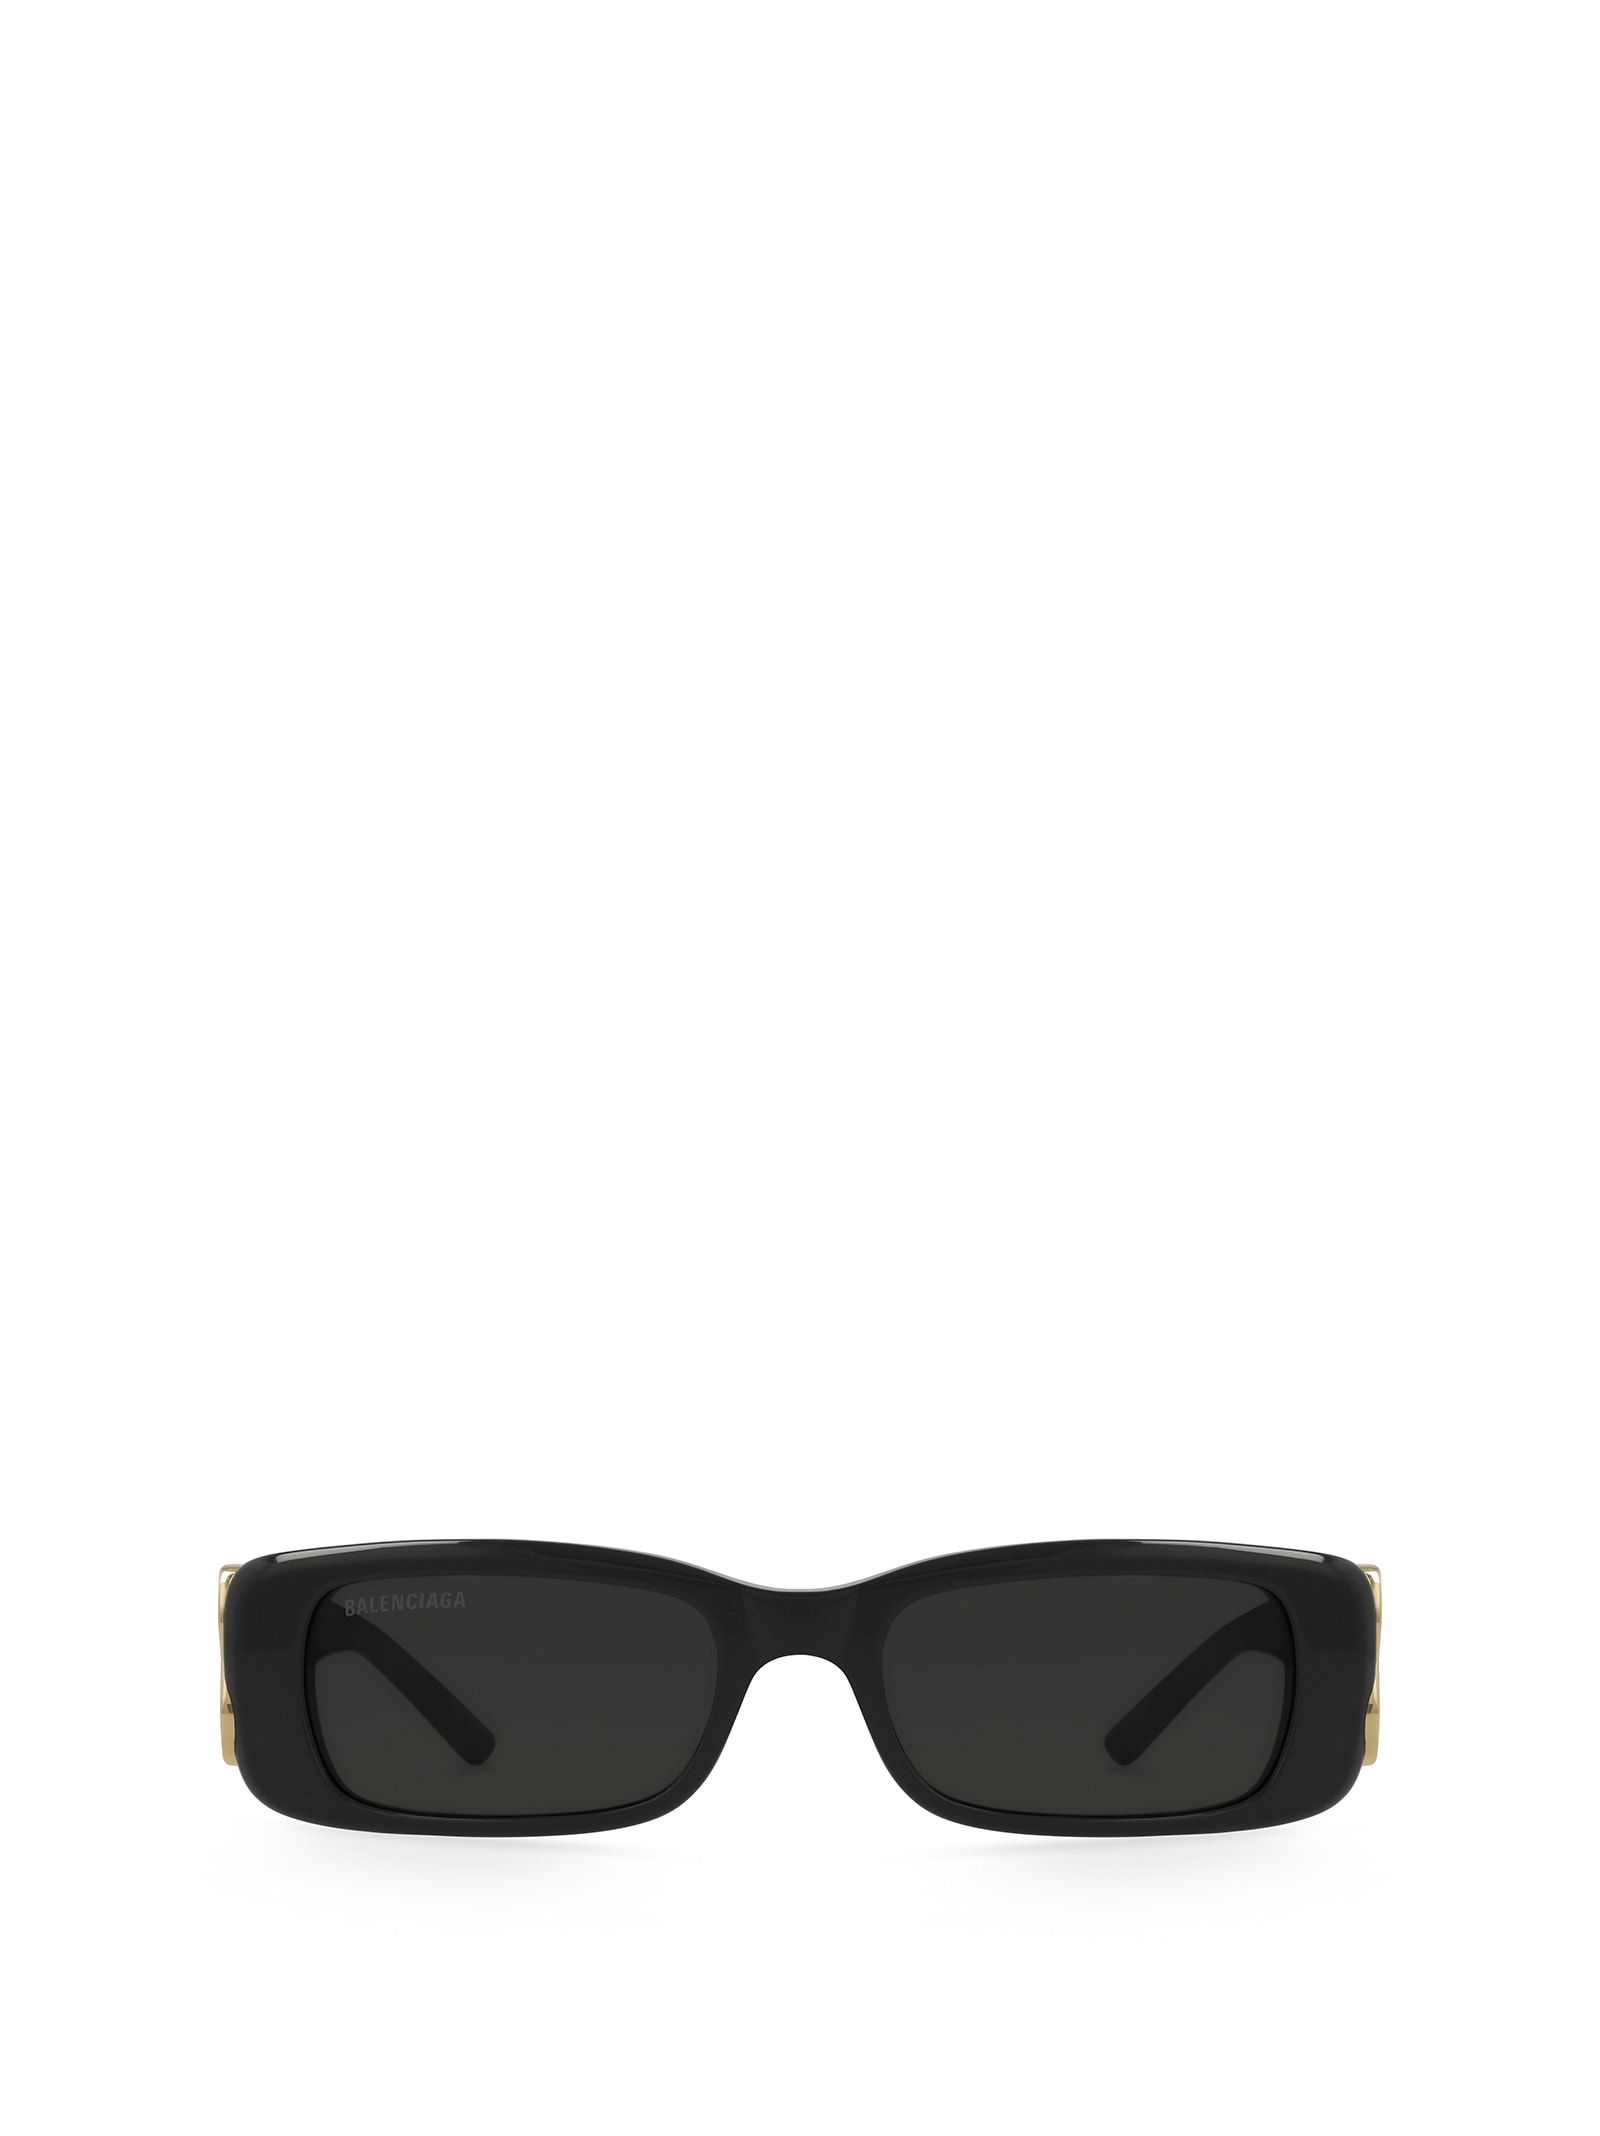 Balenciaga Eyewear Bb0096s Black Sunglasses